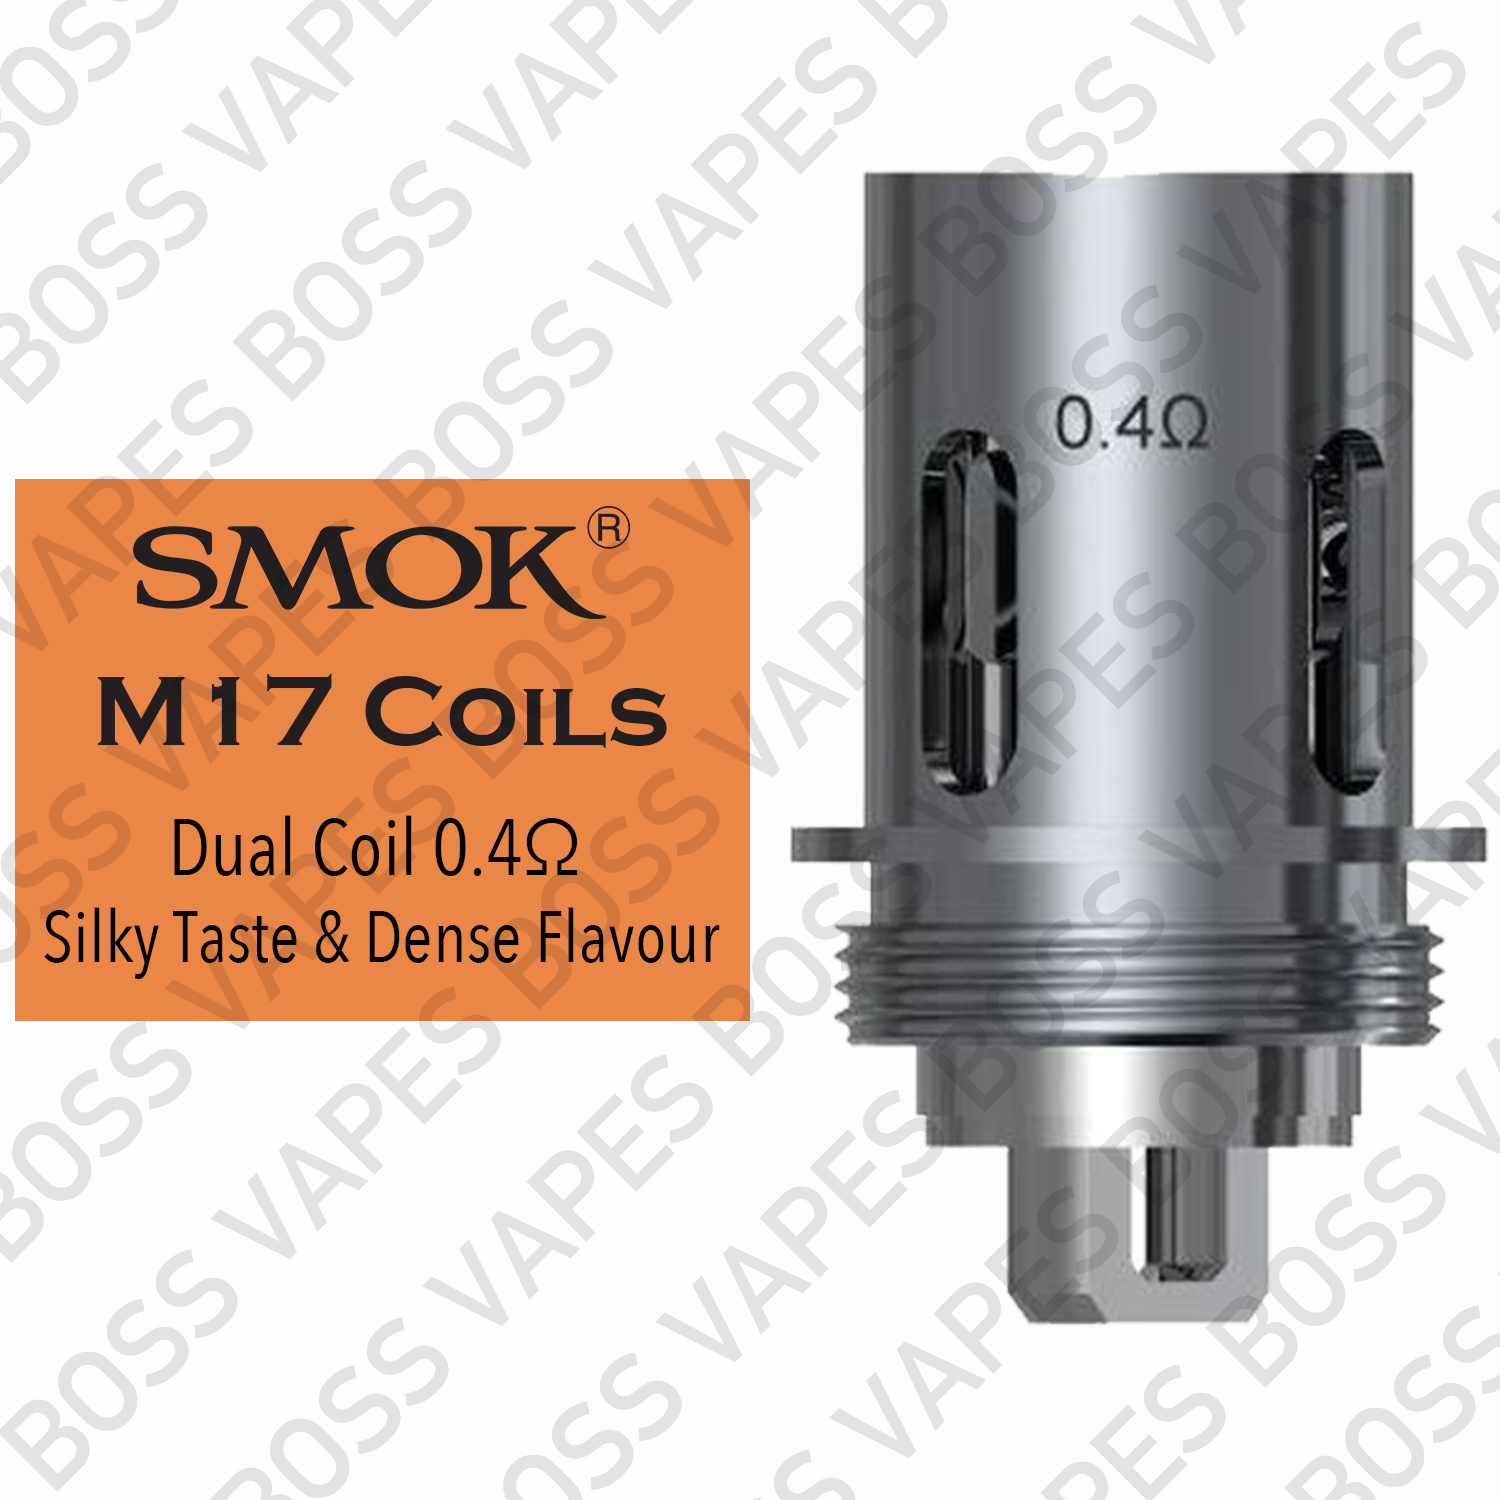 SMOK Stick M17 Coils - Boss Vapes